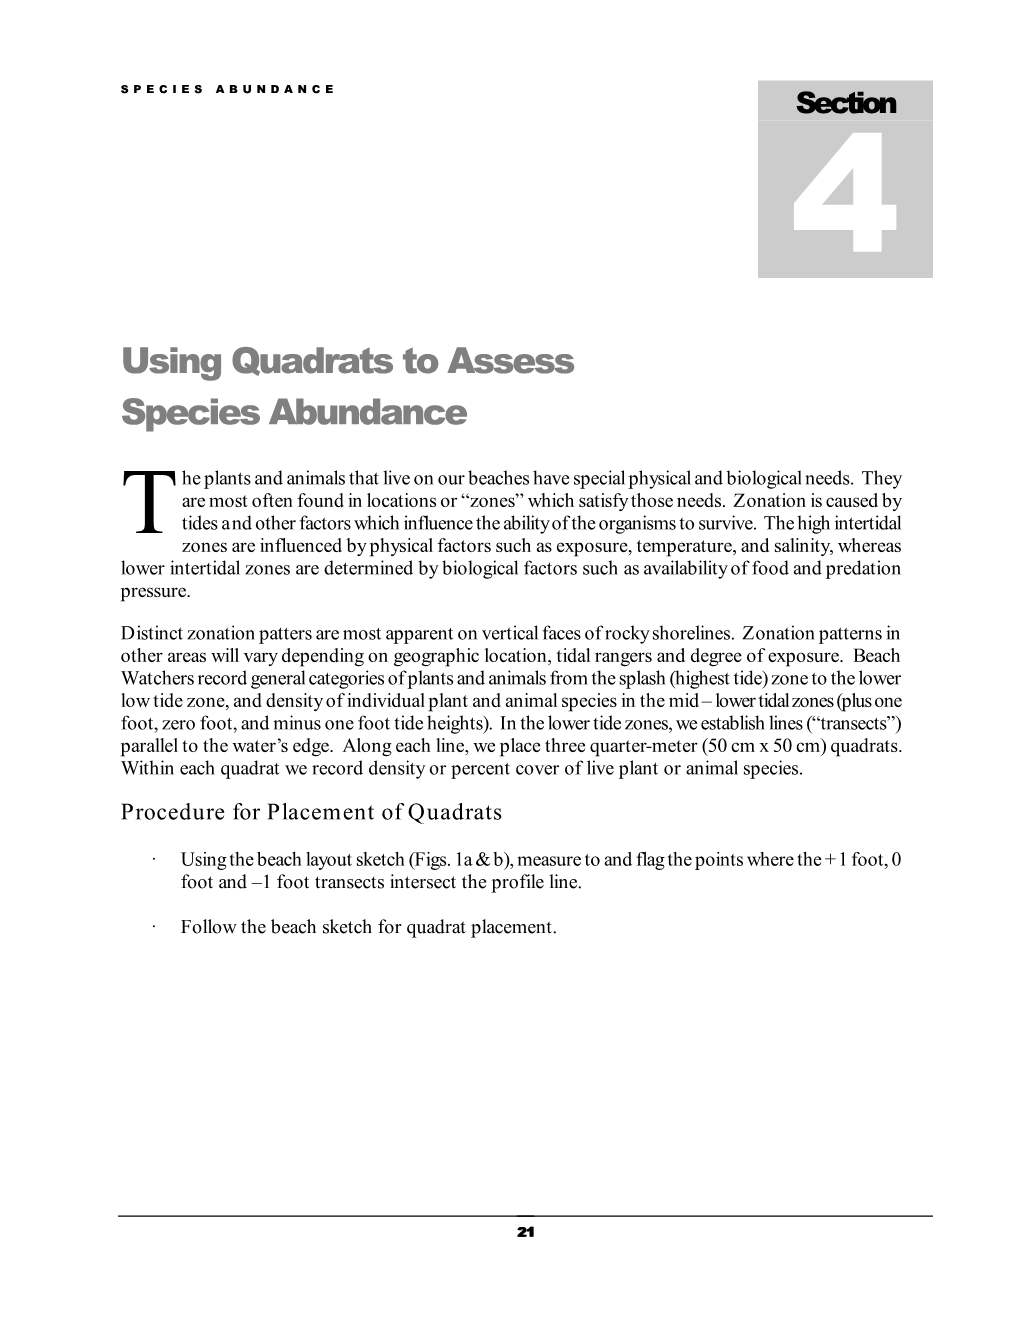 Using Quadrats to Assess Species Abundance